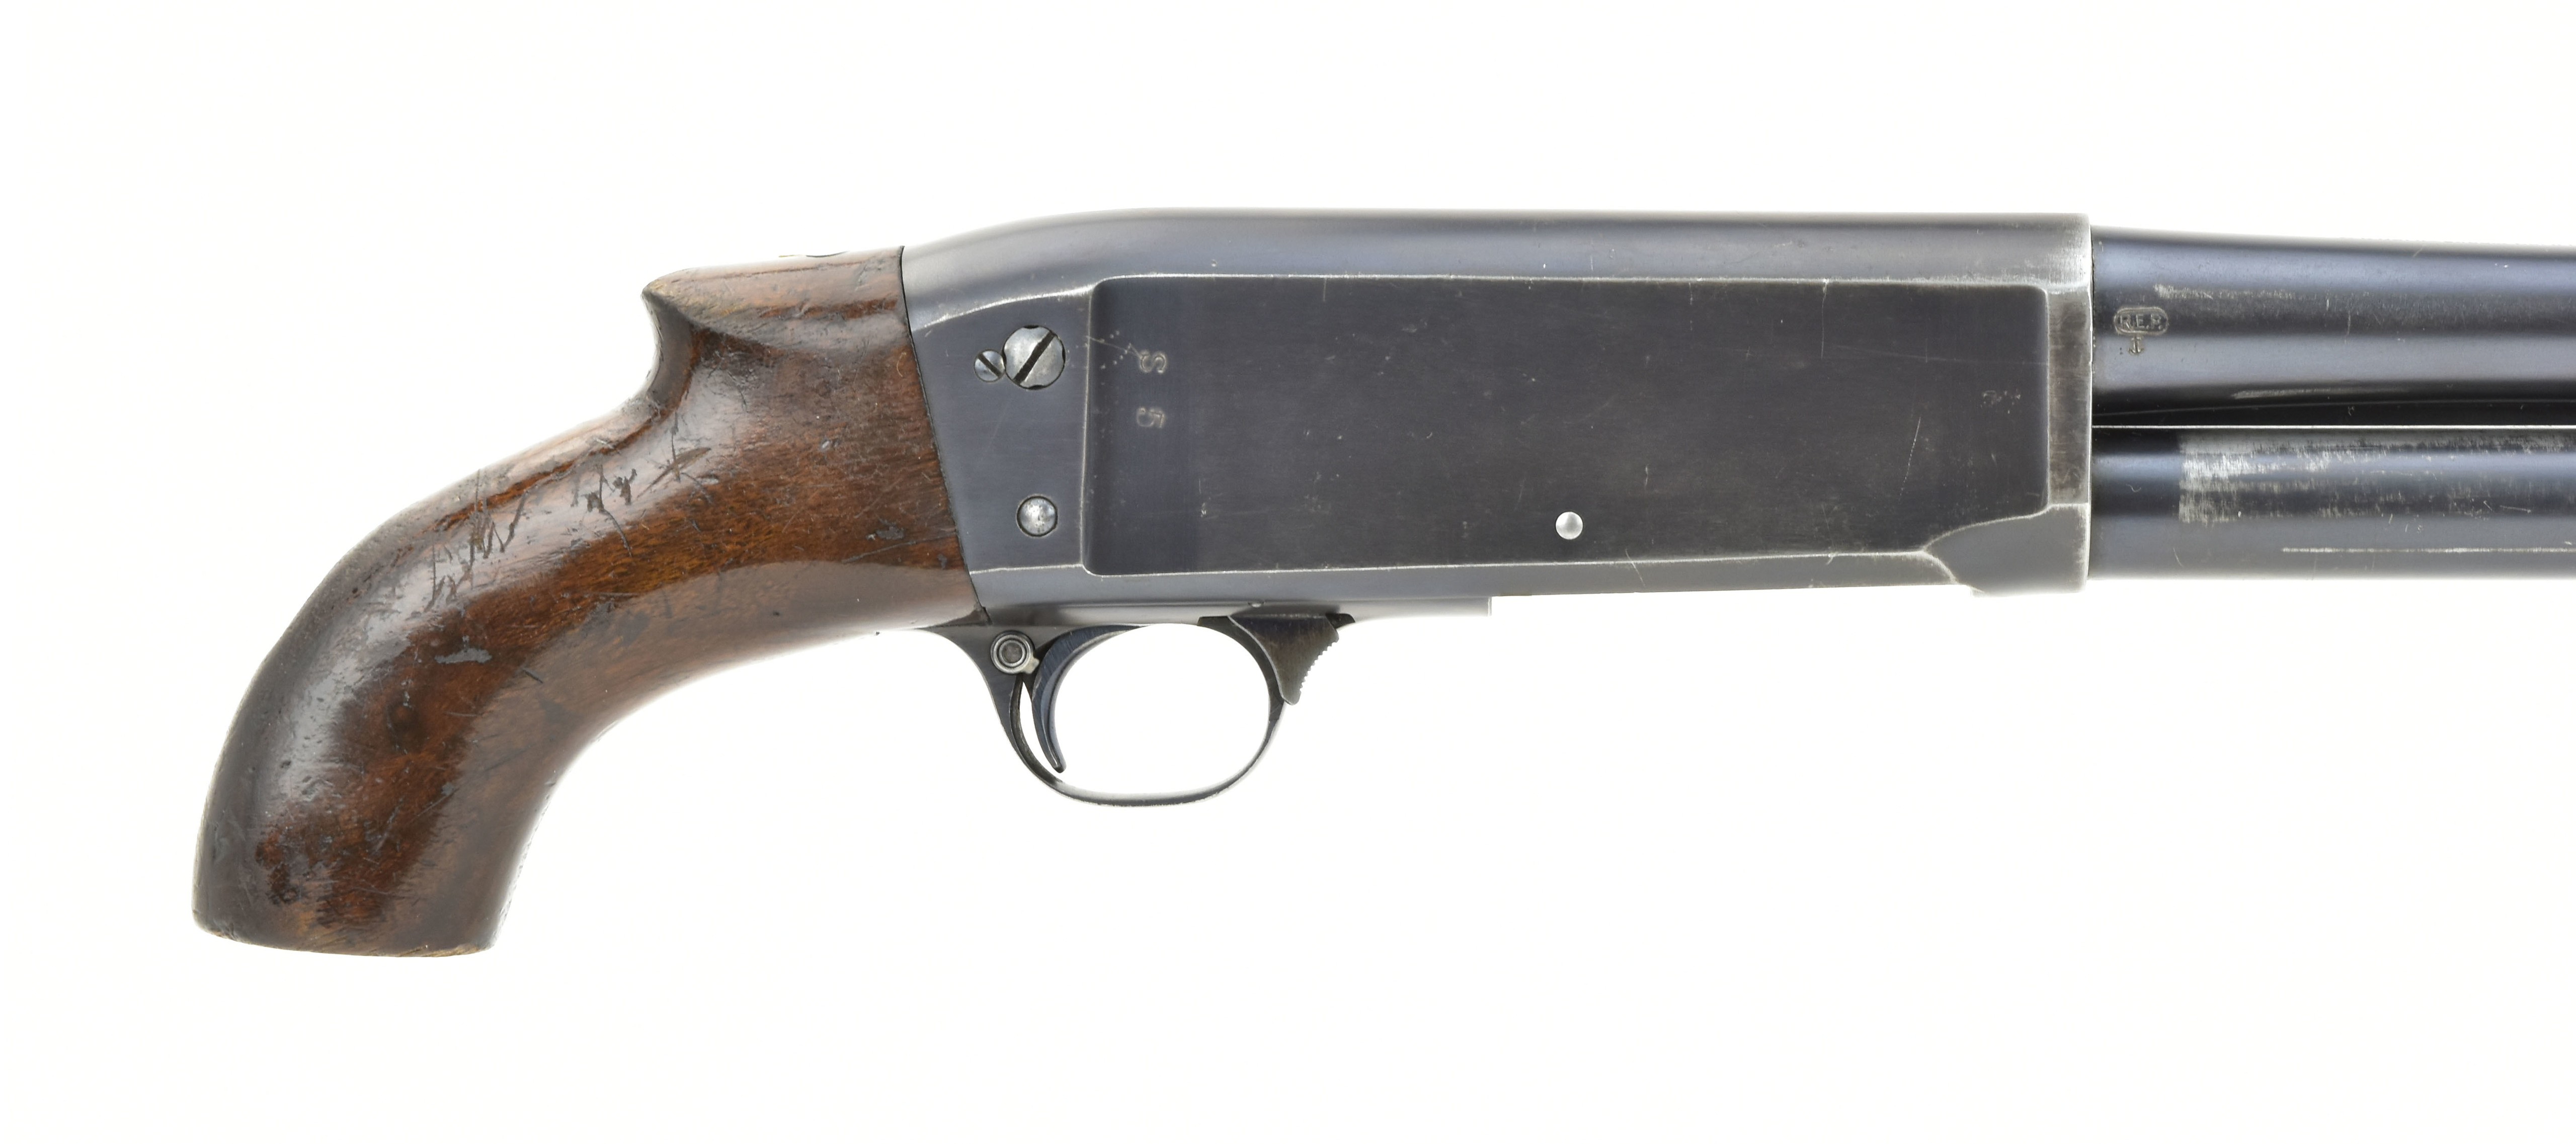 Remington 17 SBS 20 Gauge shotgun. 